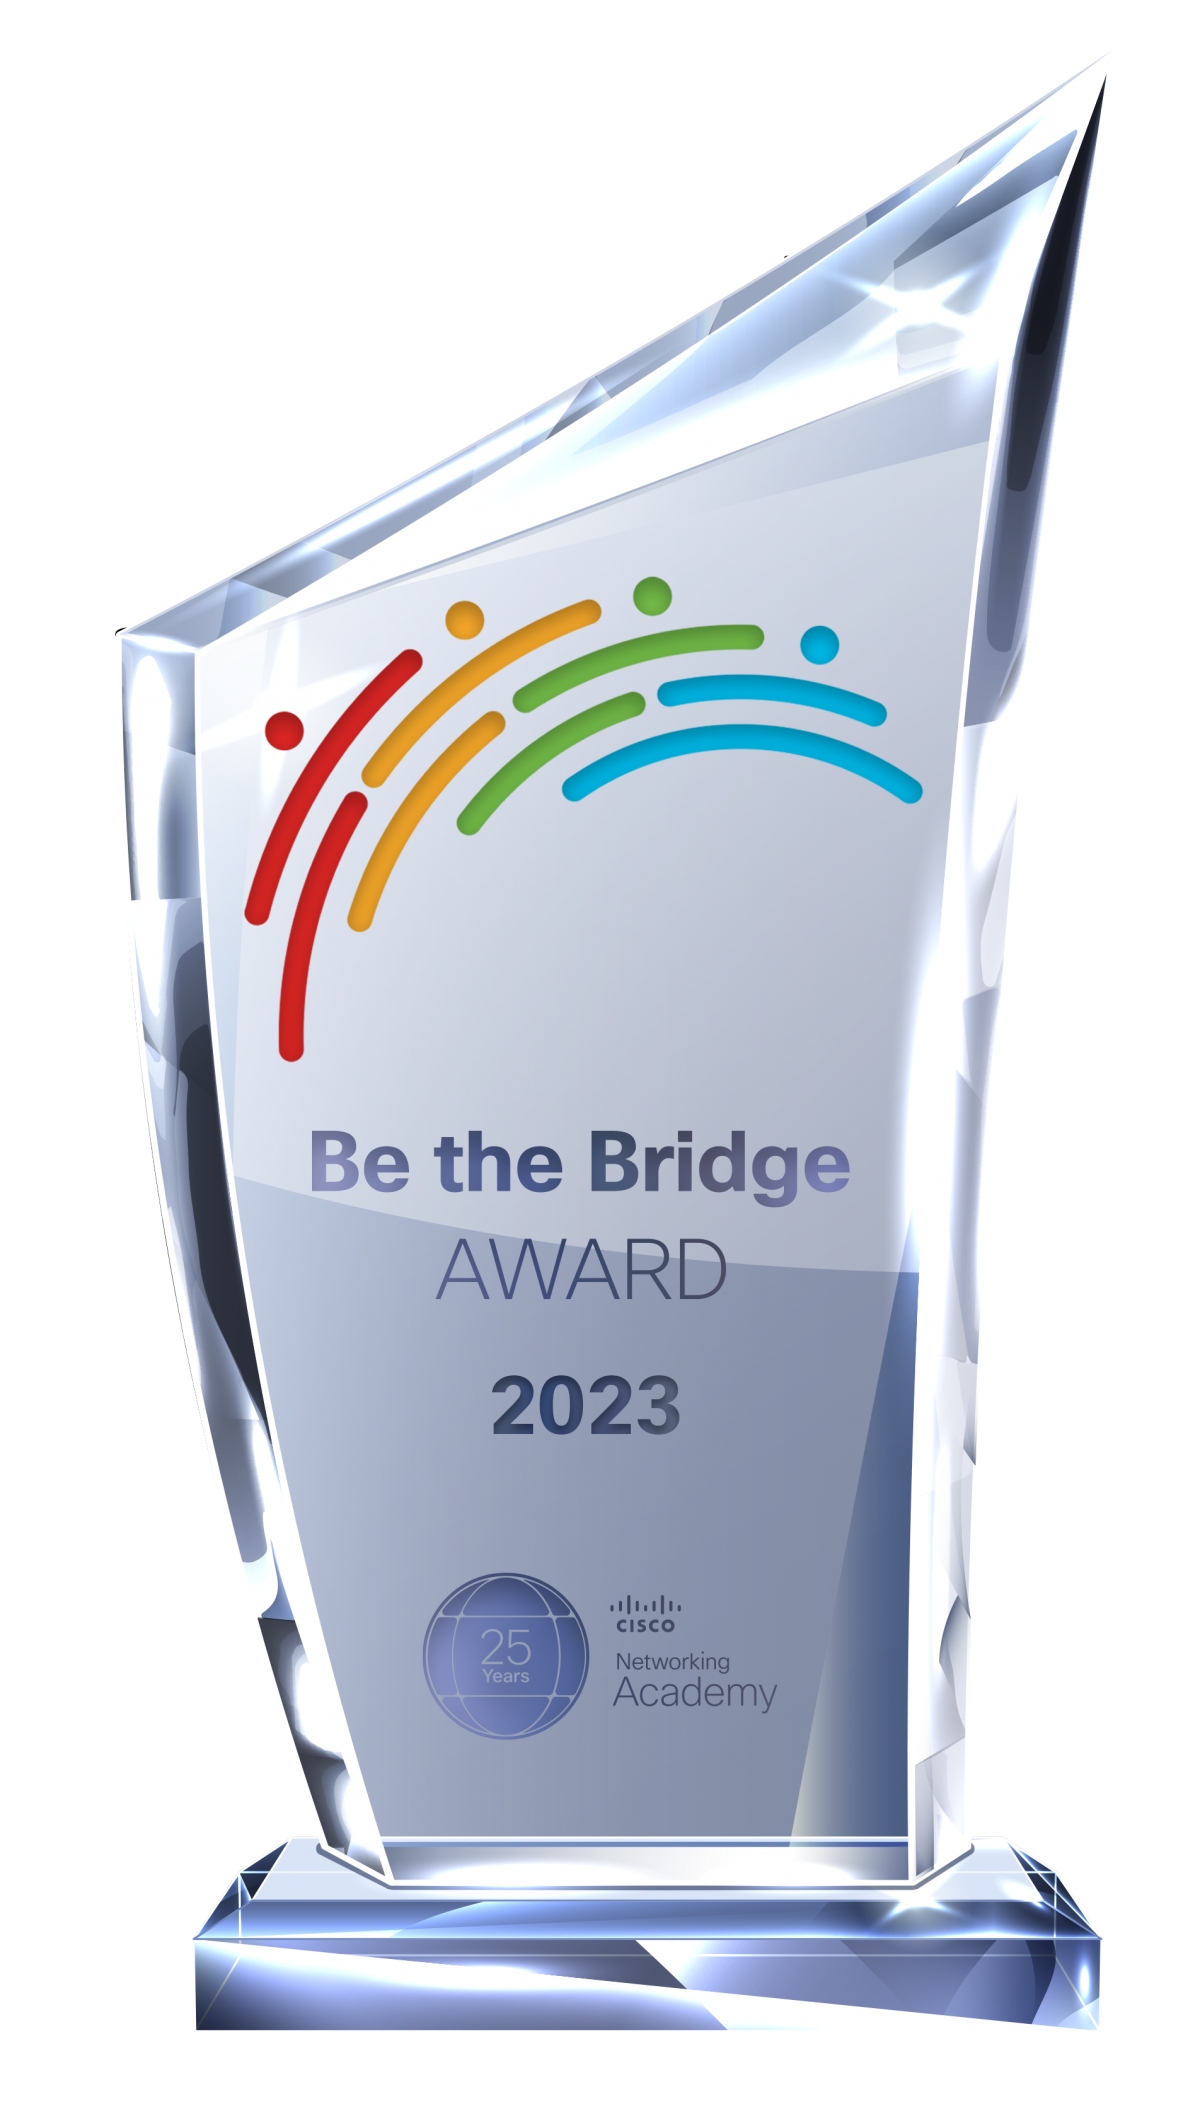 Cisco Networking Academy tặng giải thưởng "Be The Bridge Award In 2023" cho BKACAD